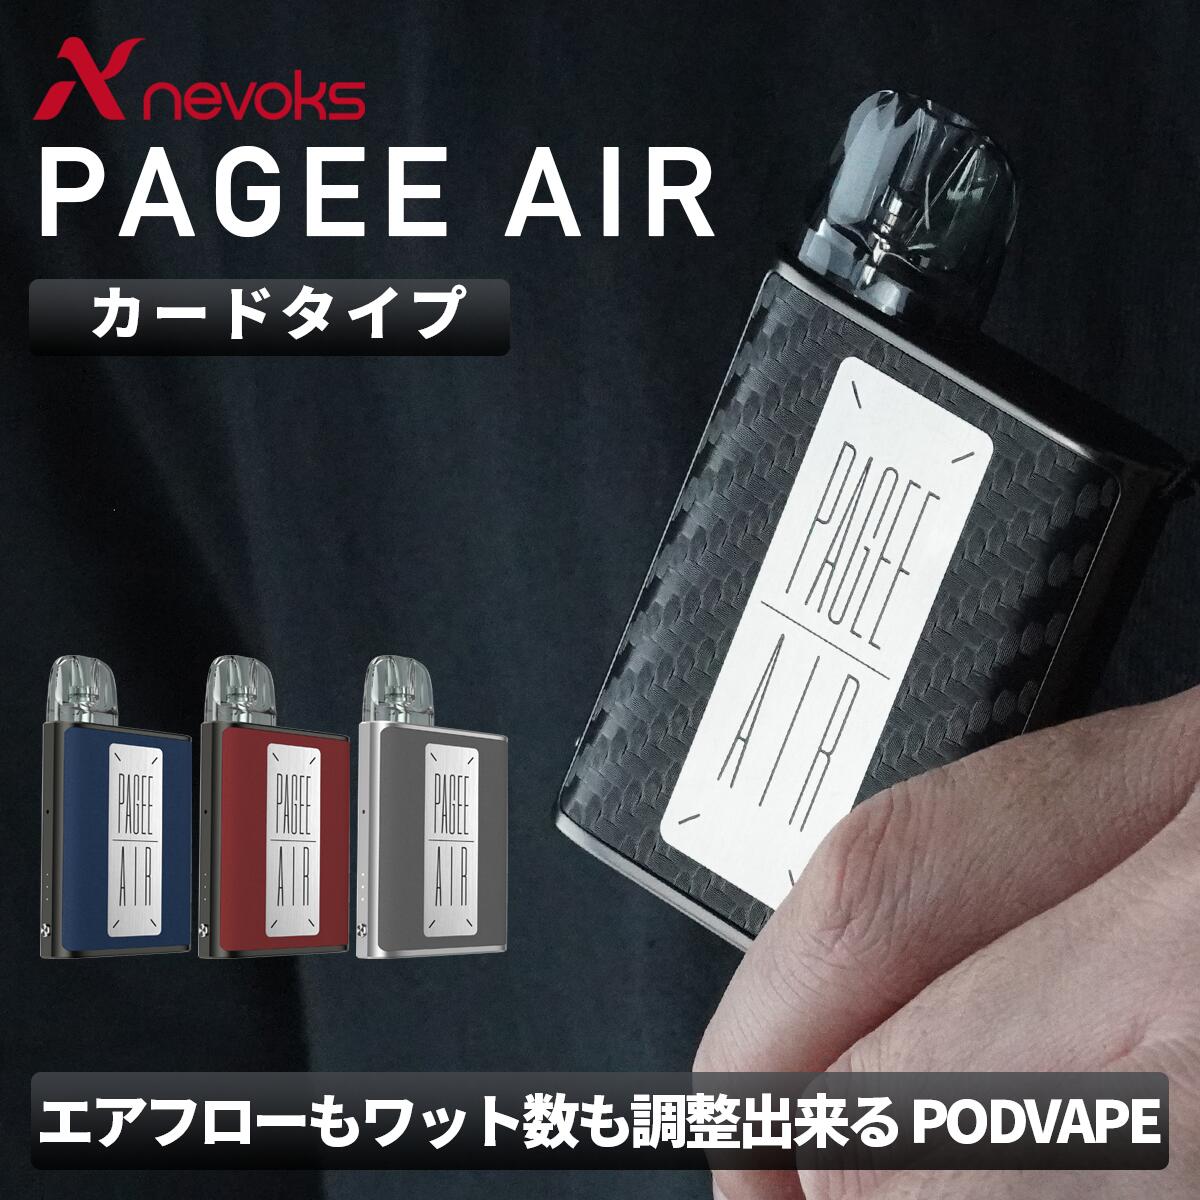 Pagee Air ペイジーエアー スターターキット nevoks ネボックス| ベプログ 電子タバコ 禁煙